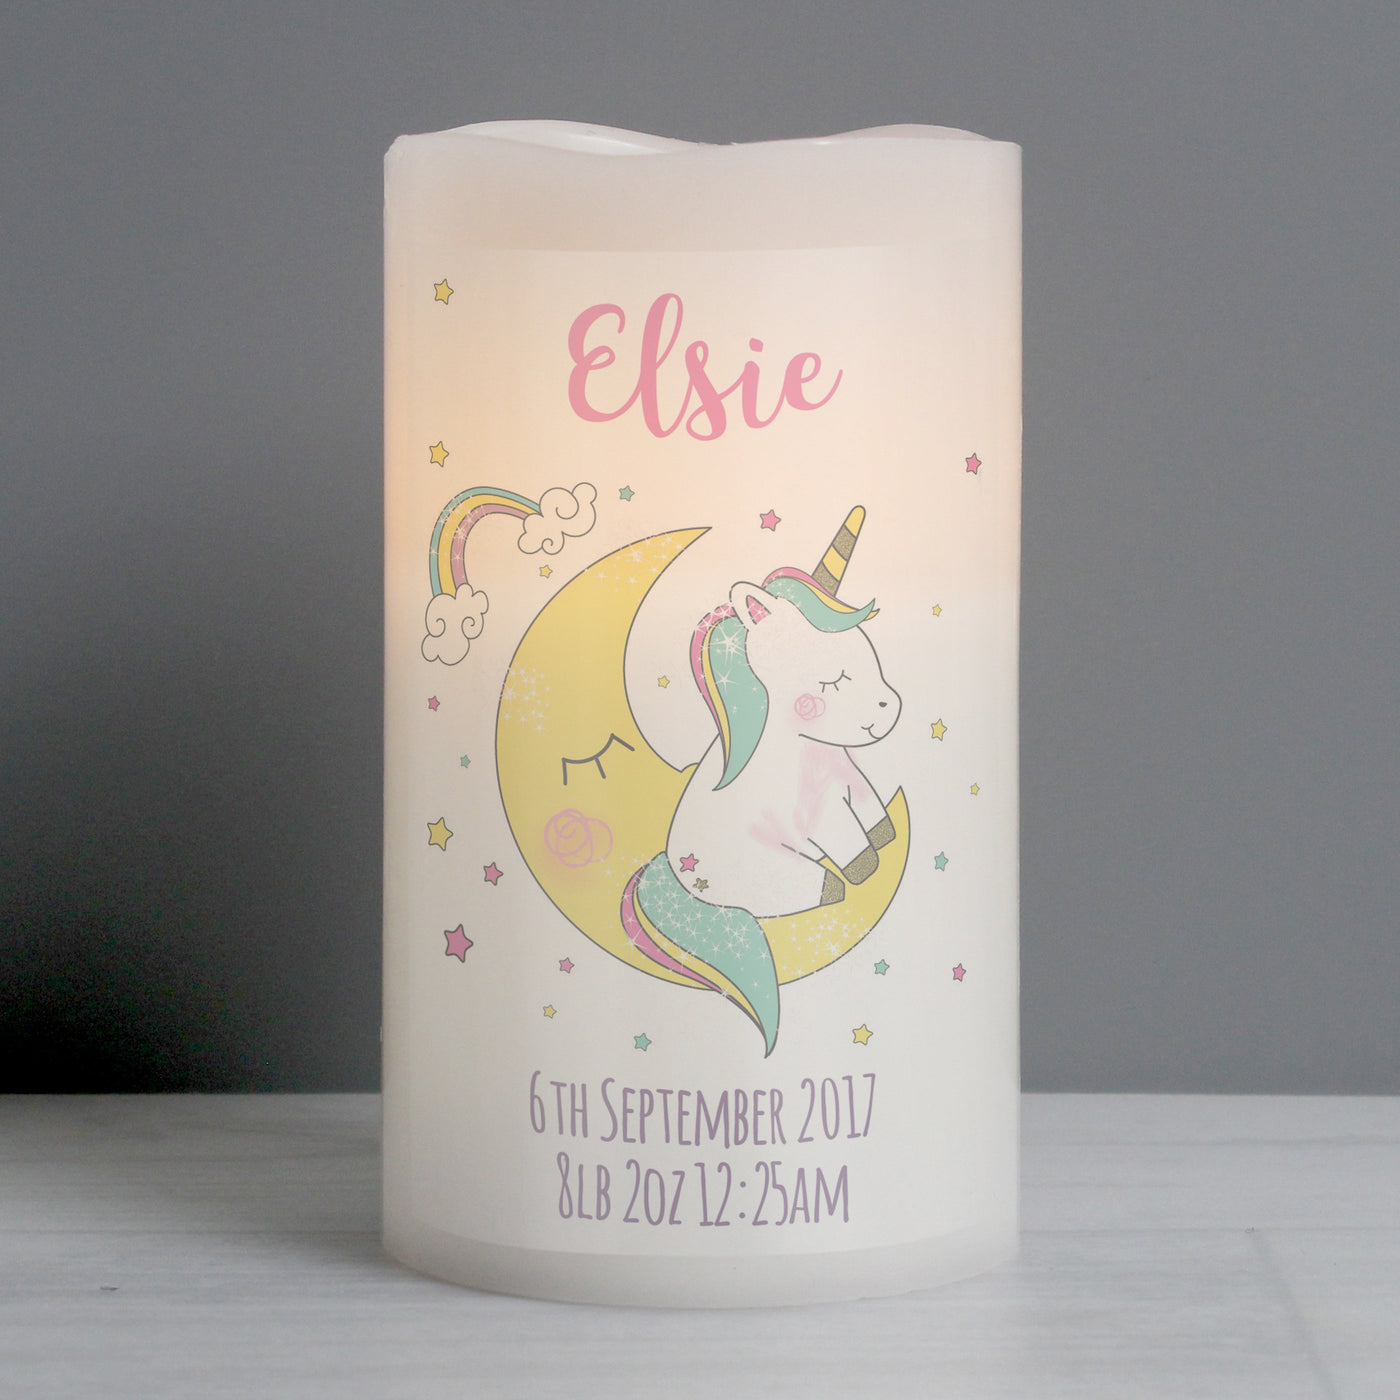 Personalised Baby Unicorn Nightlight LED Candle - Shop Personalised Gifts